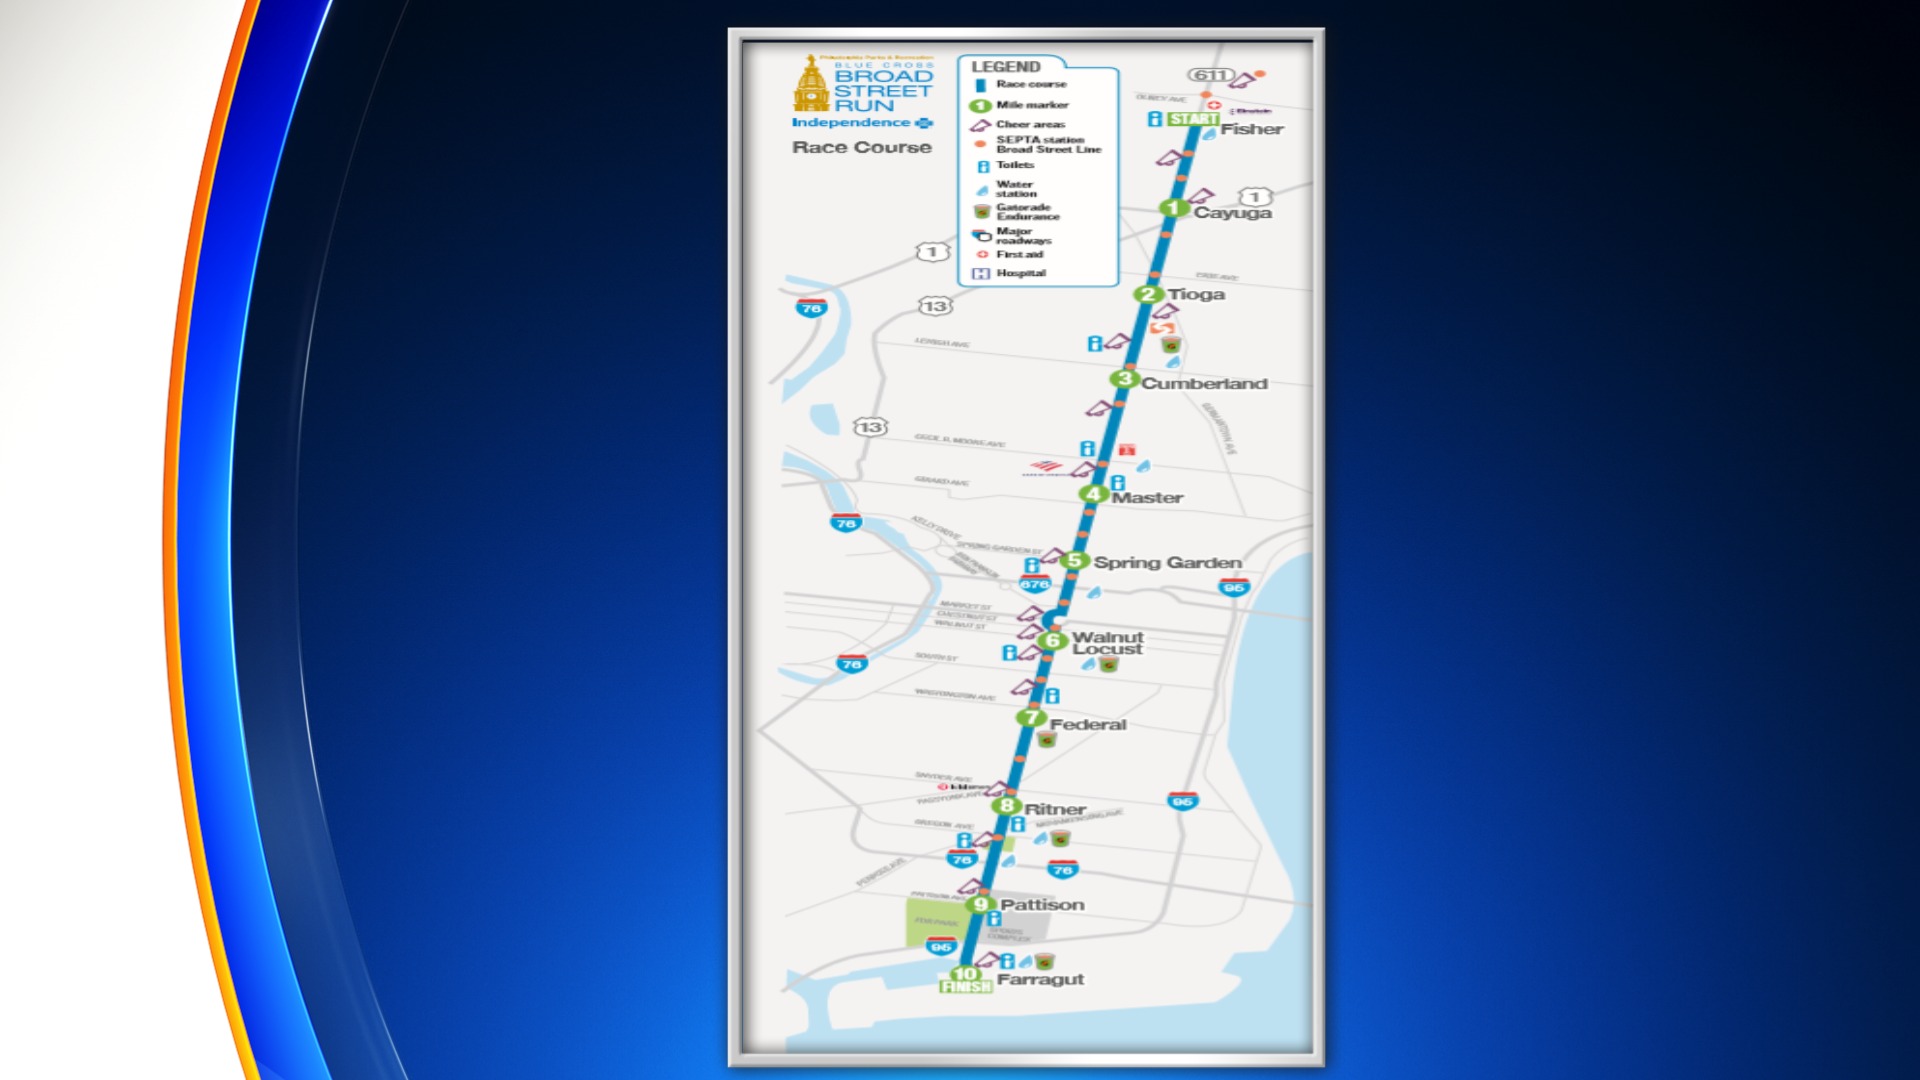 2022 Blue Cross Broad Street Run: Date, Course Map, Road Closures – NBC10  Philadelphia